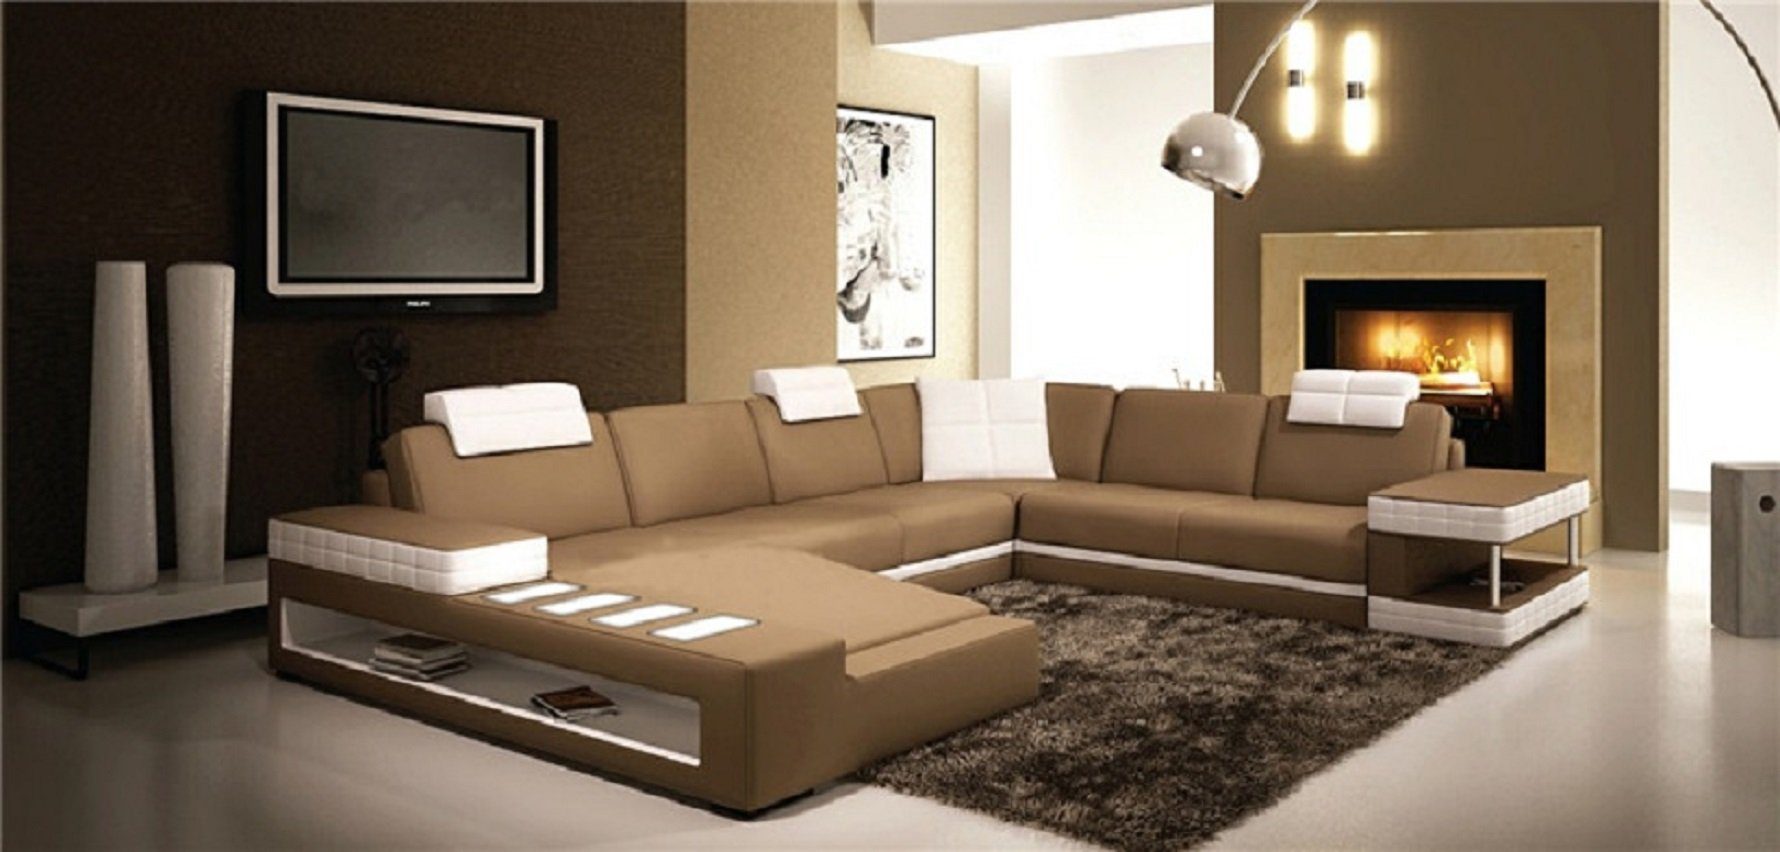 JVmoebel Ecksofa U Form Braun/Weiß Leder Couch Polster Design Luxus Sofa Wohnlandschaft Ecksofa